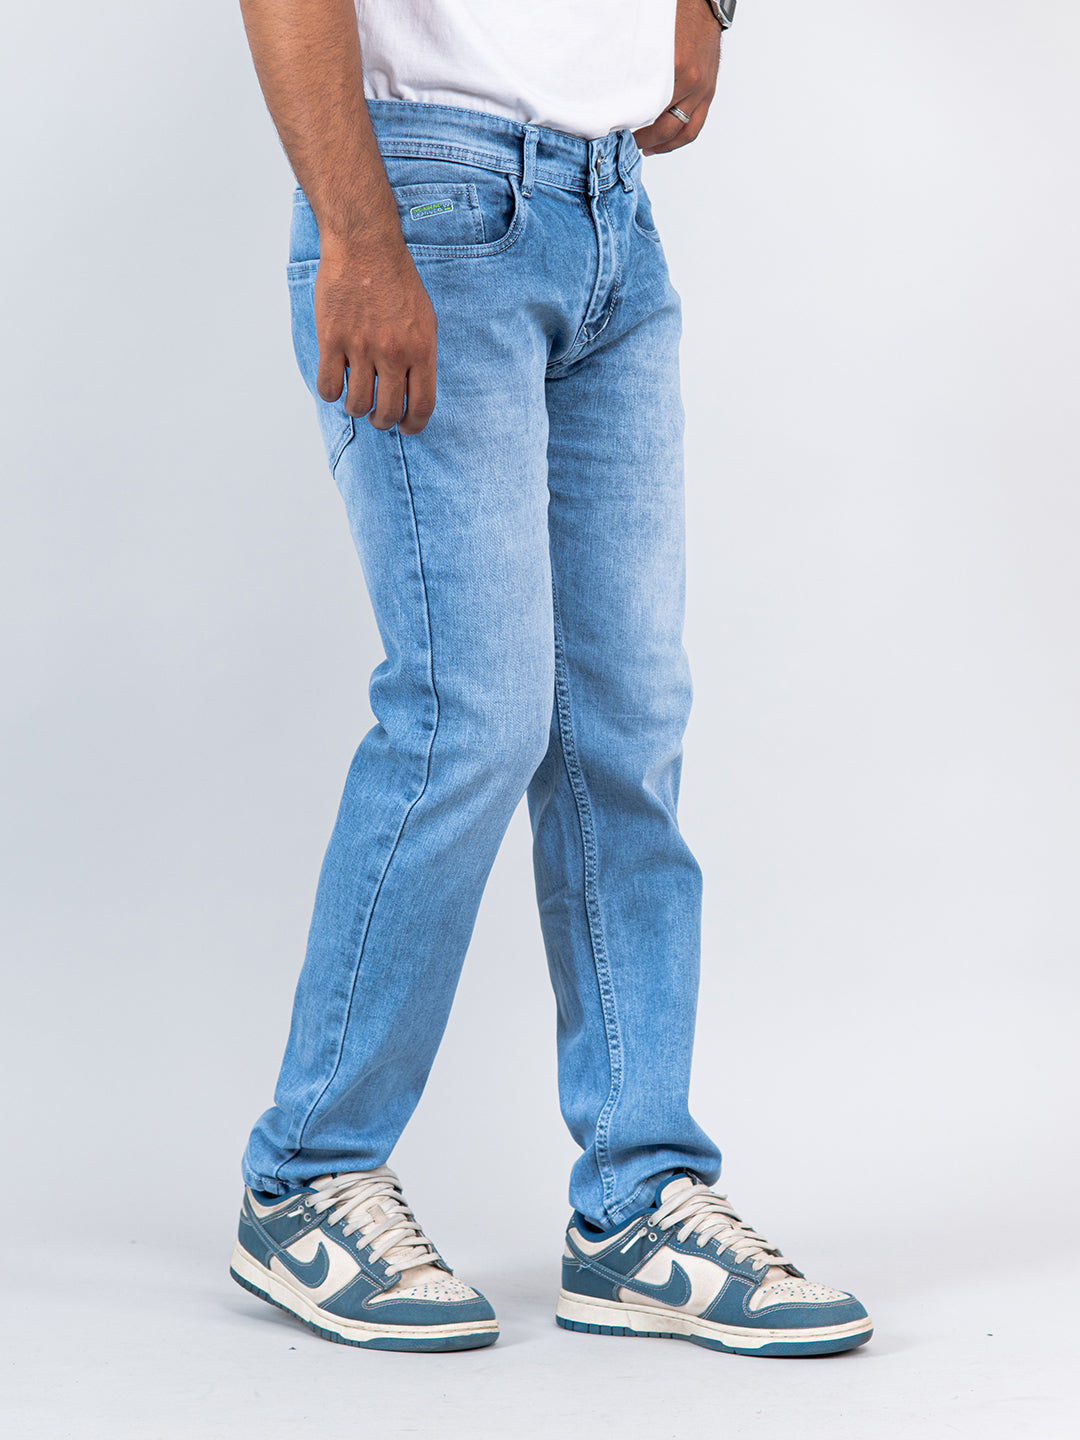 Jeans & Pants | U.S POLO ASSAN. DARK BLUE DENIM JEANS | Freeup